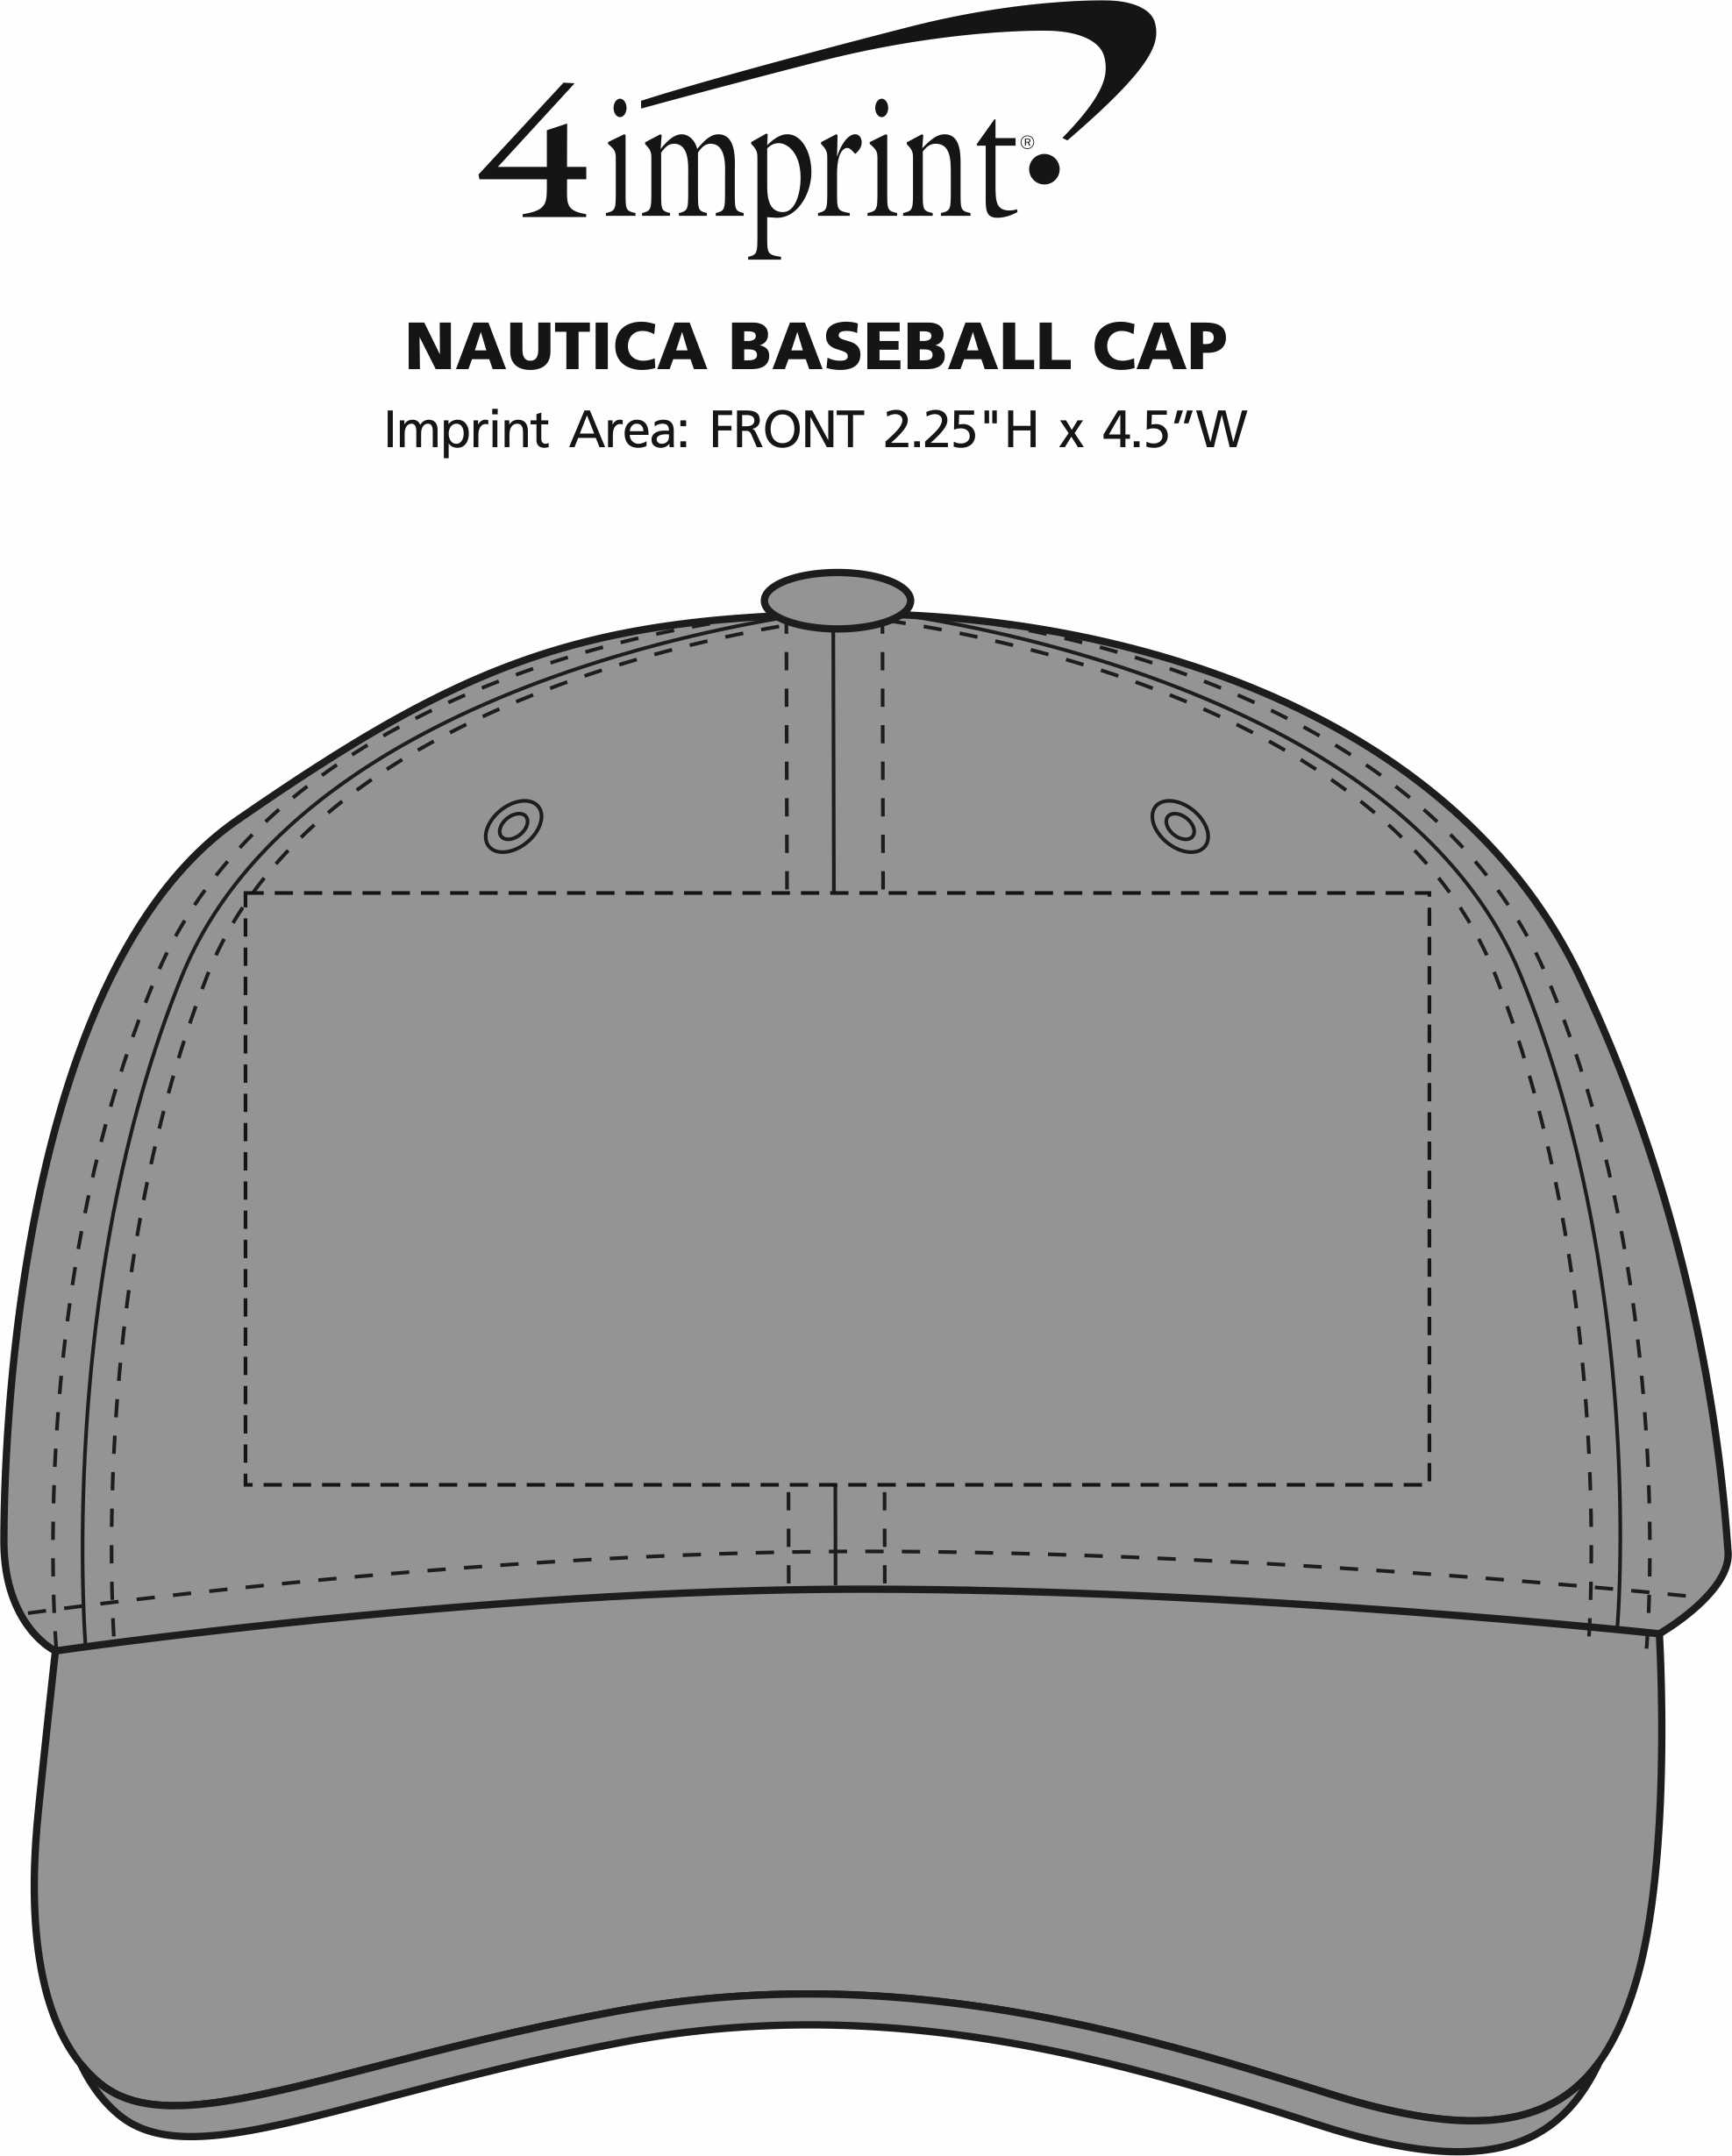 Imprint Area of Nautica Baseball Cap